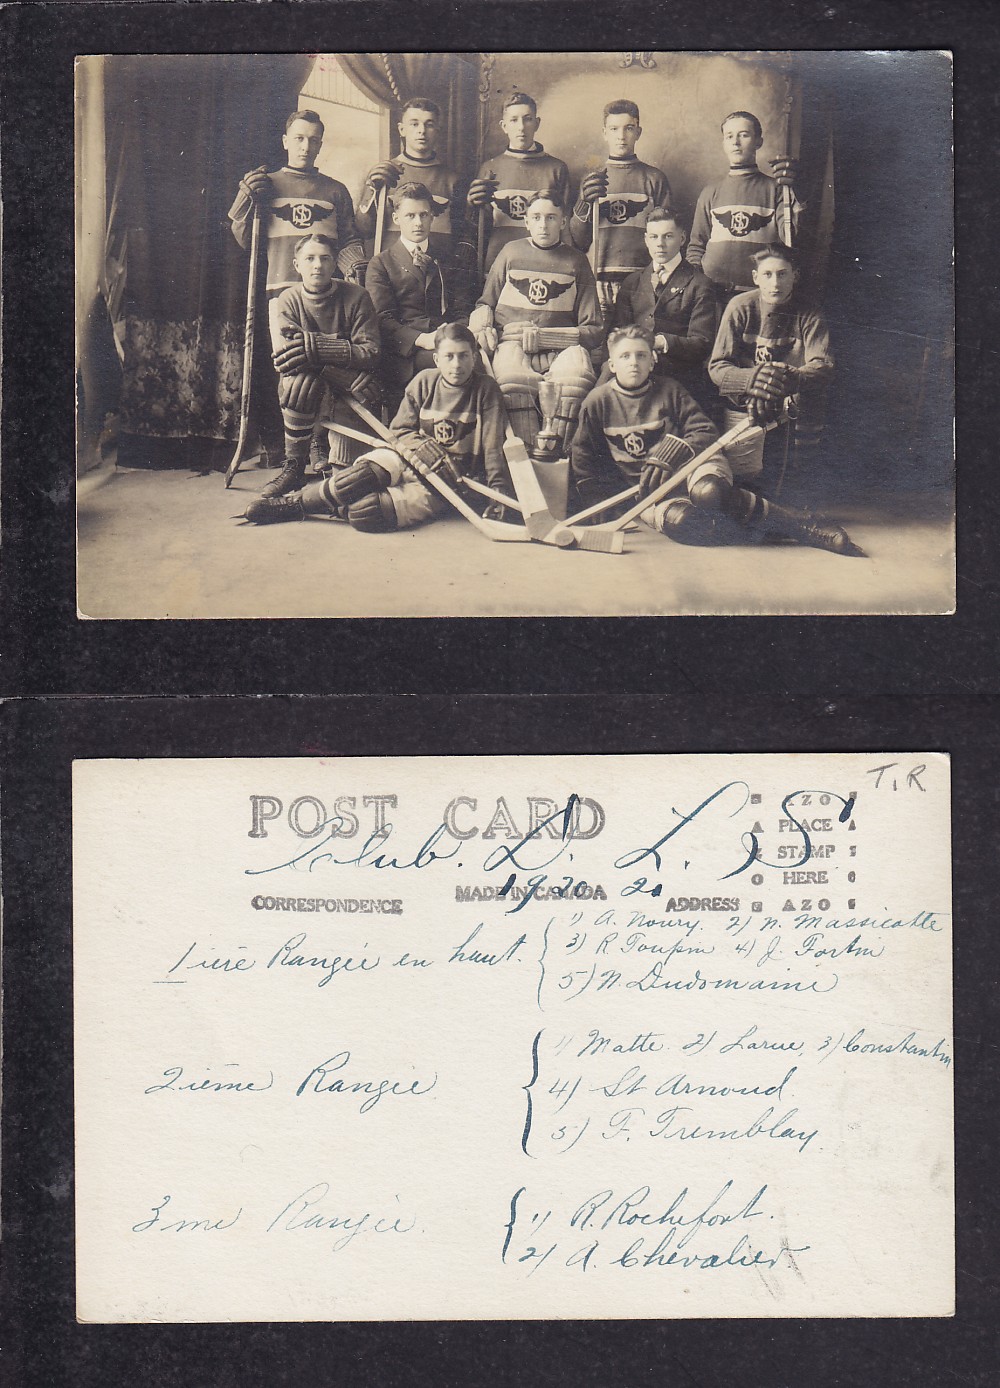 1920-21 TROIS RIVIERES HOCKEY TEAM POST CARD photo